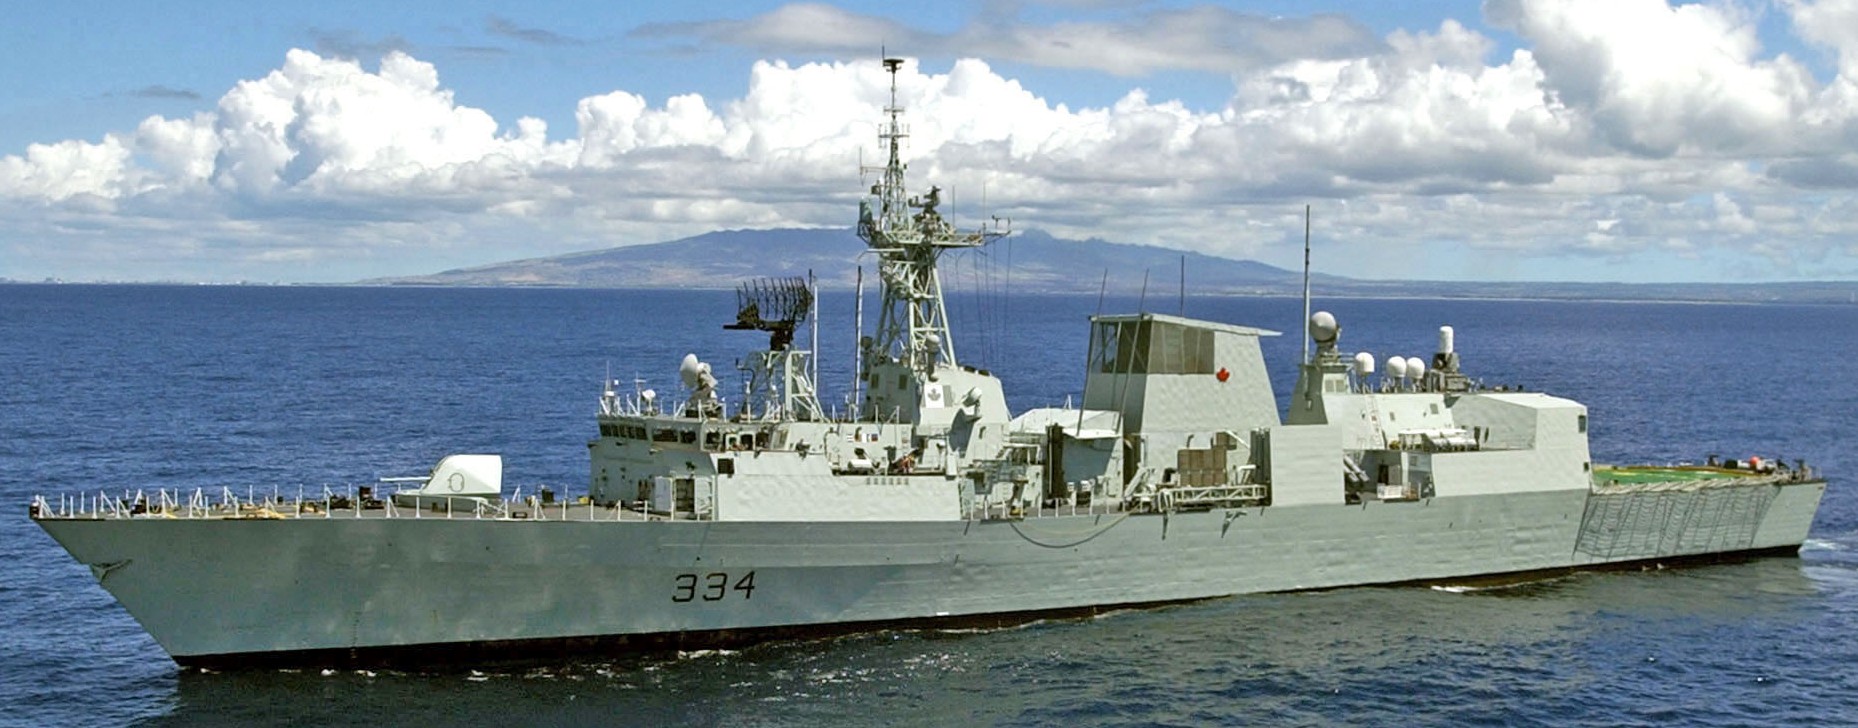 ffh-334 hmcs regina halifax class helicopter patrol frigate ncsm royal canadian navy 22